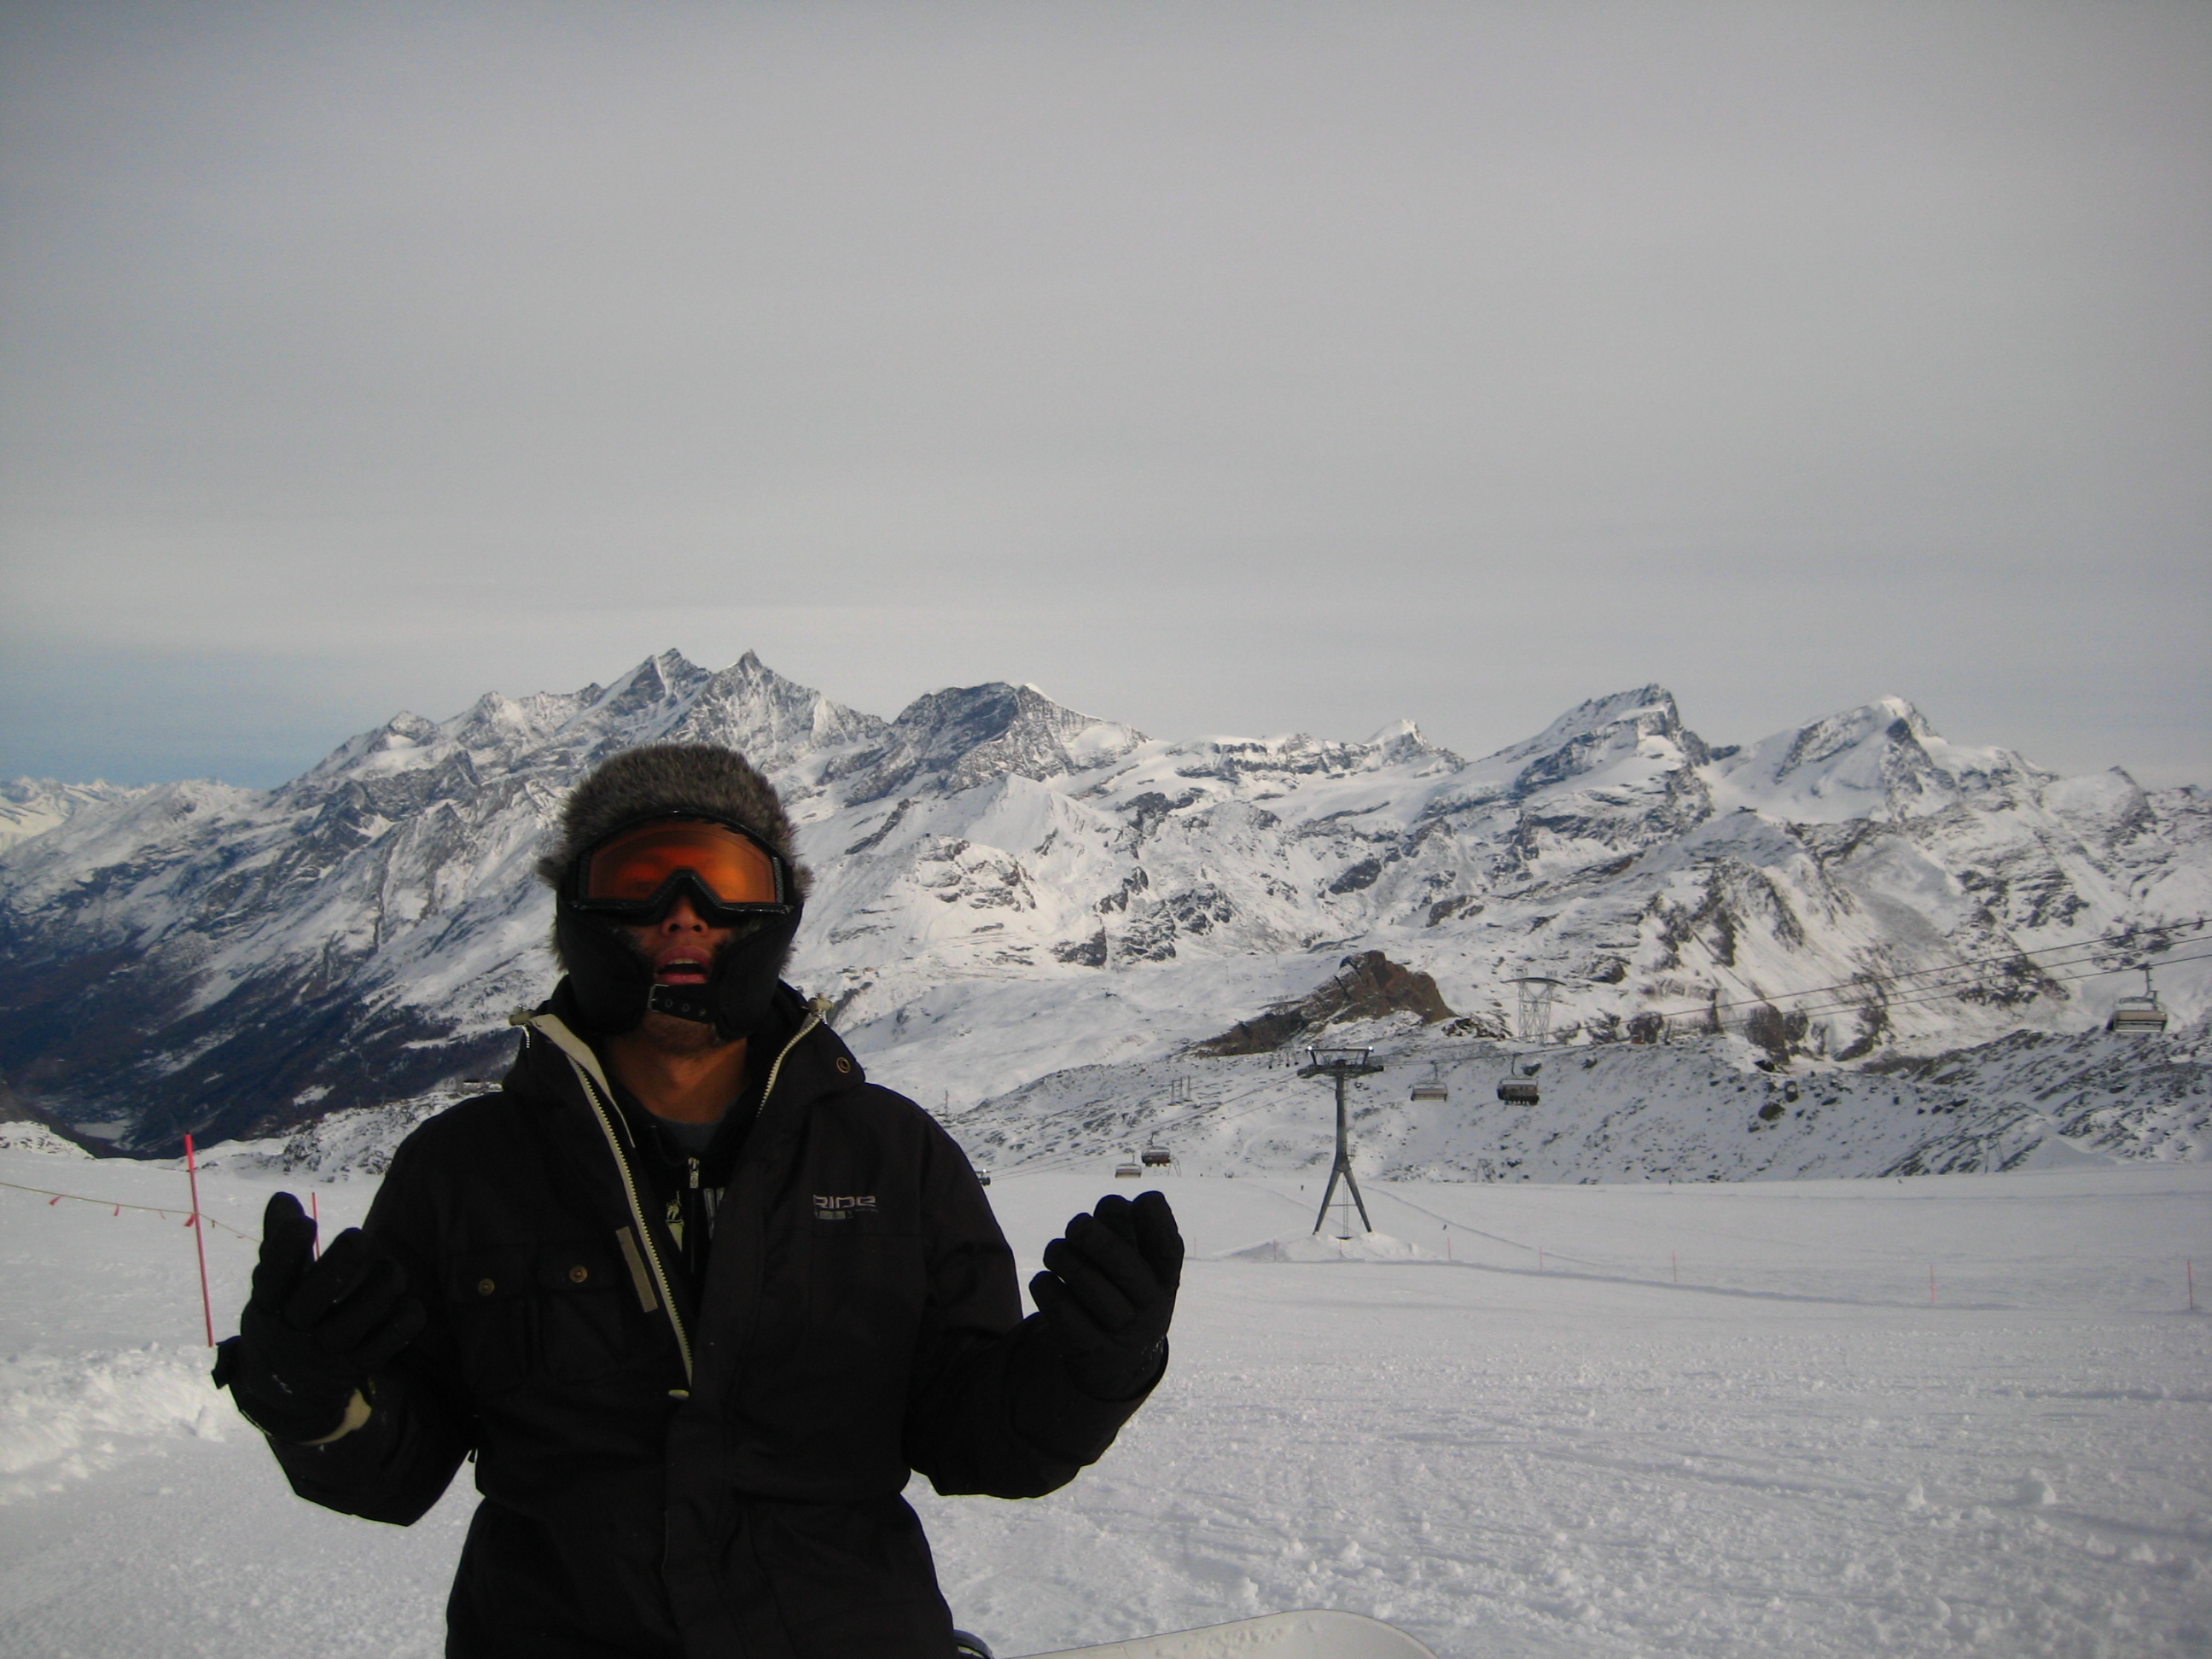 Snowboard the Swiss Alps – Zermatt, Switzerland